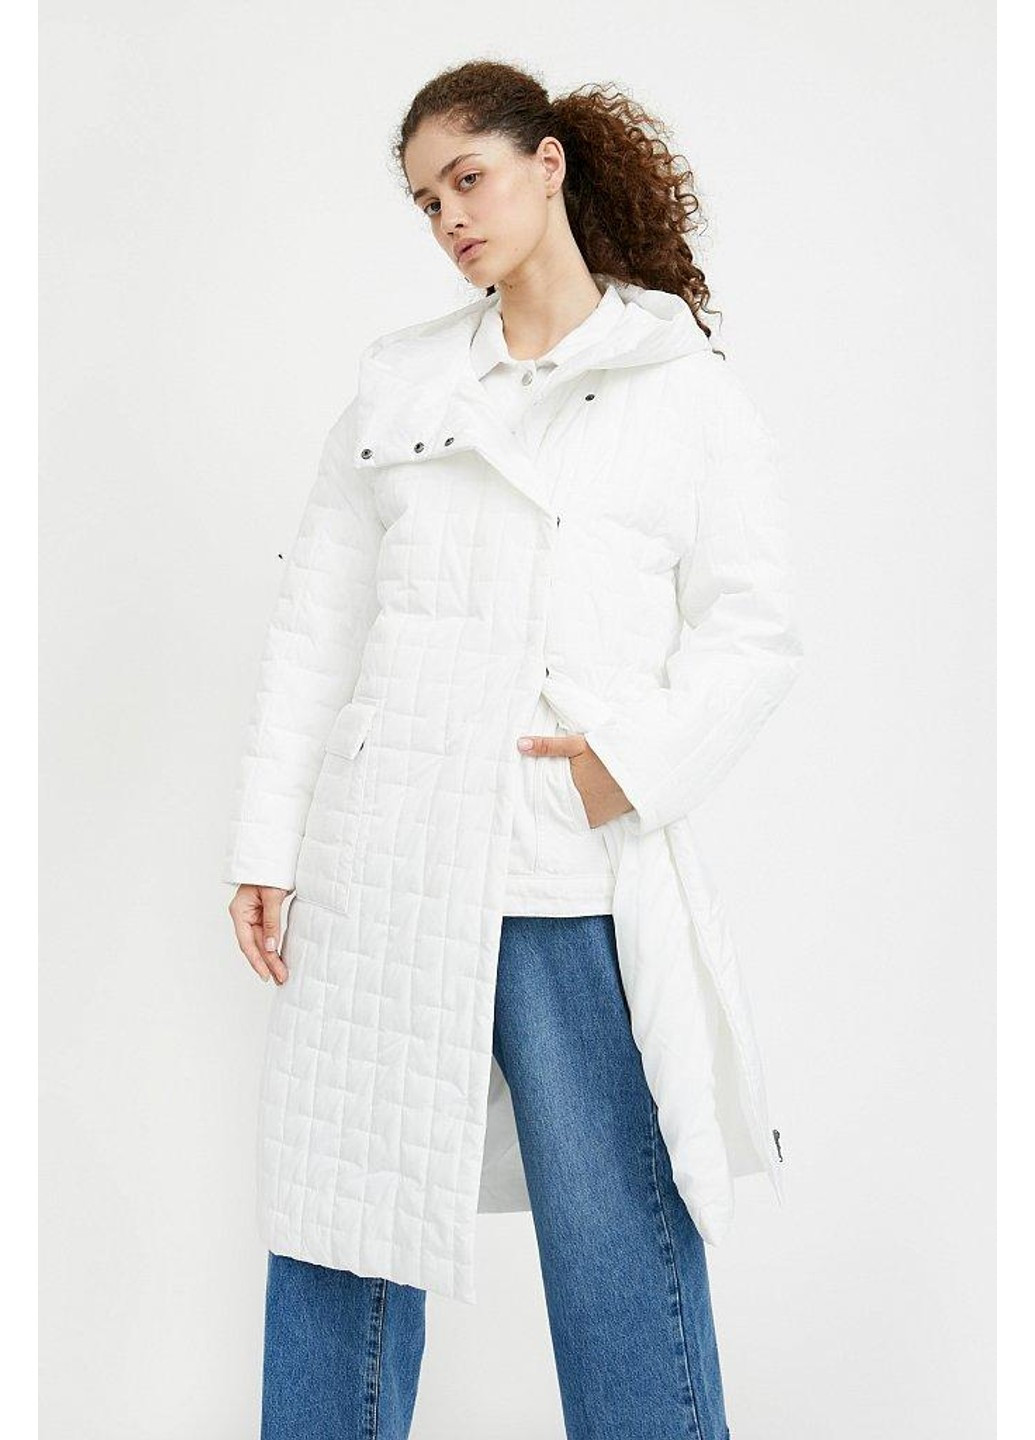 Белая демисезонная пальто a20-32026-201 Finn Flare